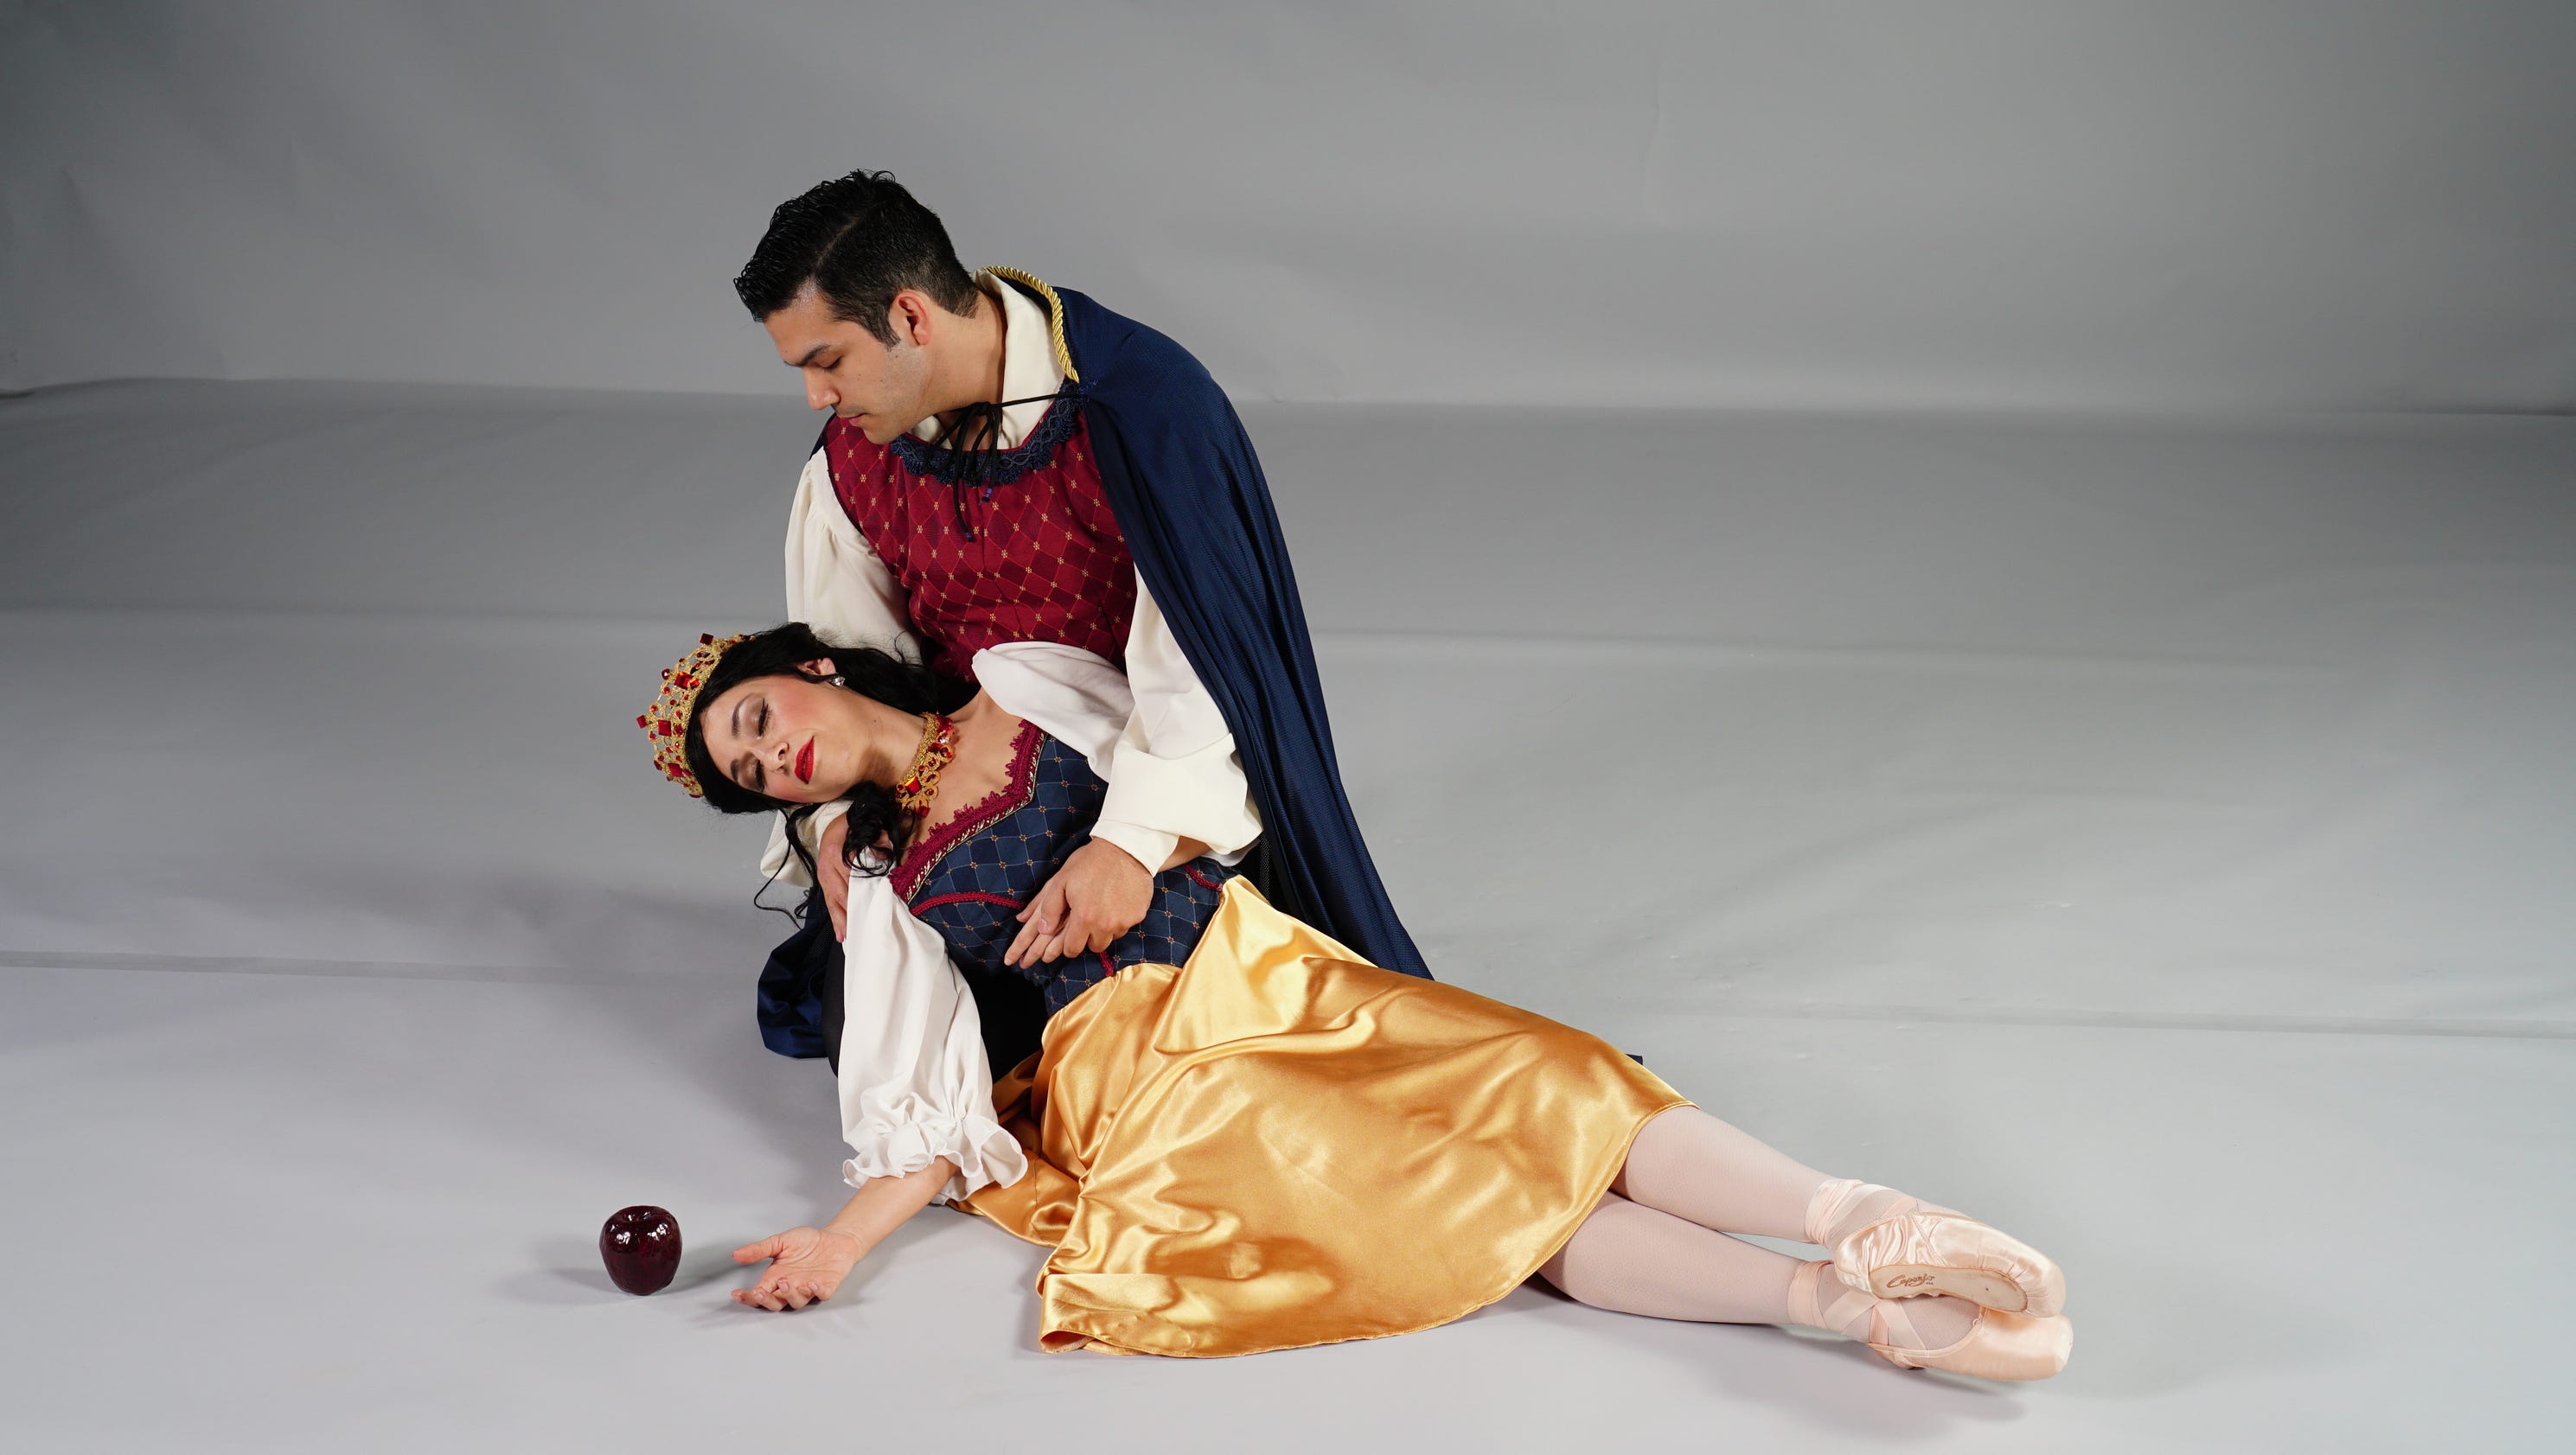 Corpus Christi Ballet takes on 'Snow White' production - Corpus Christi Caller-Times